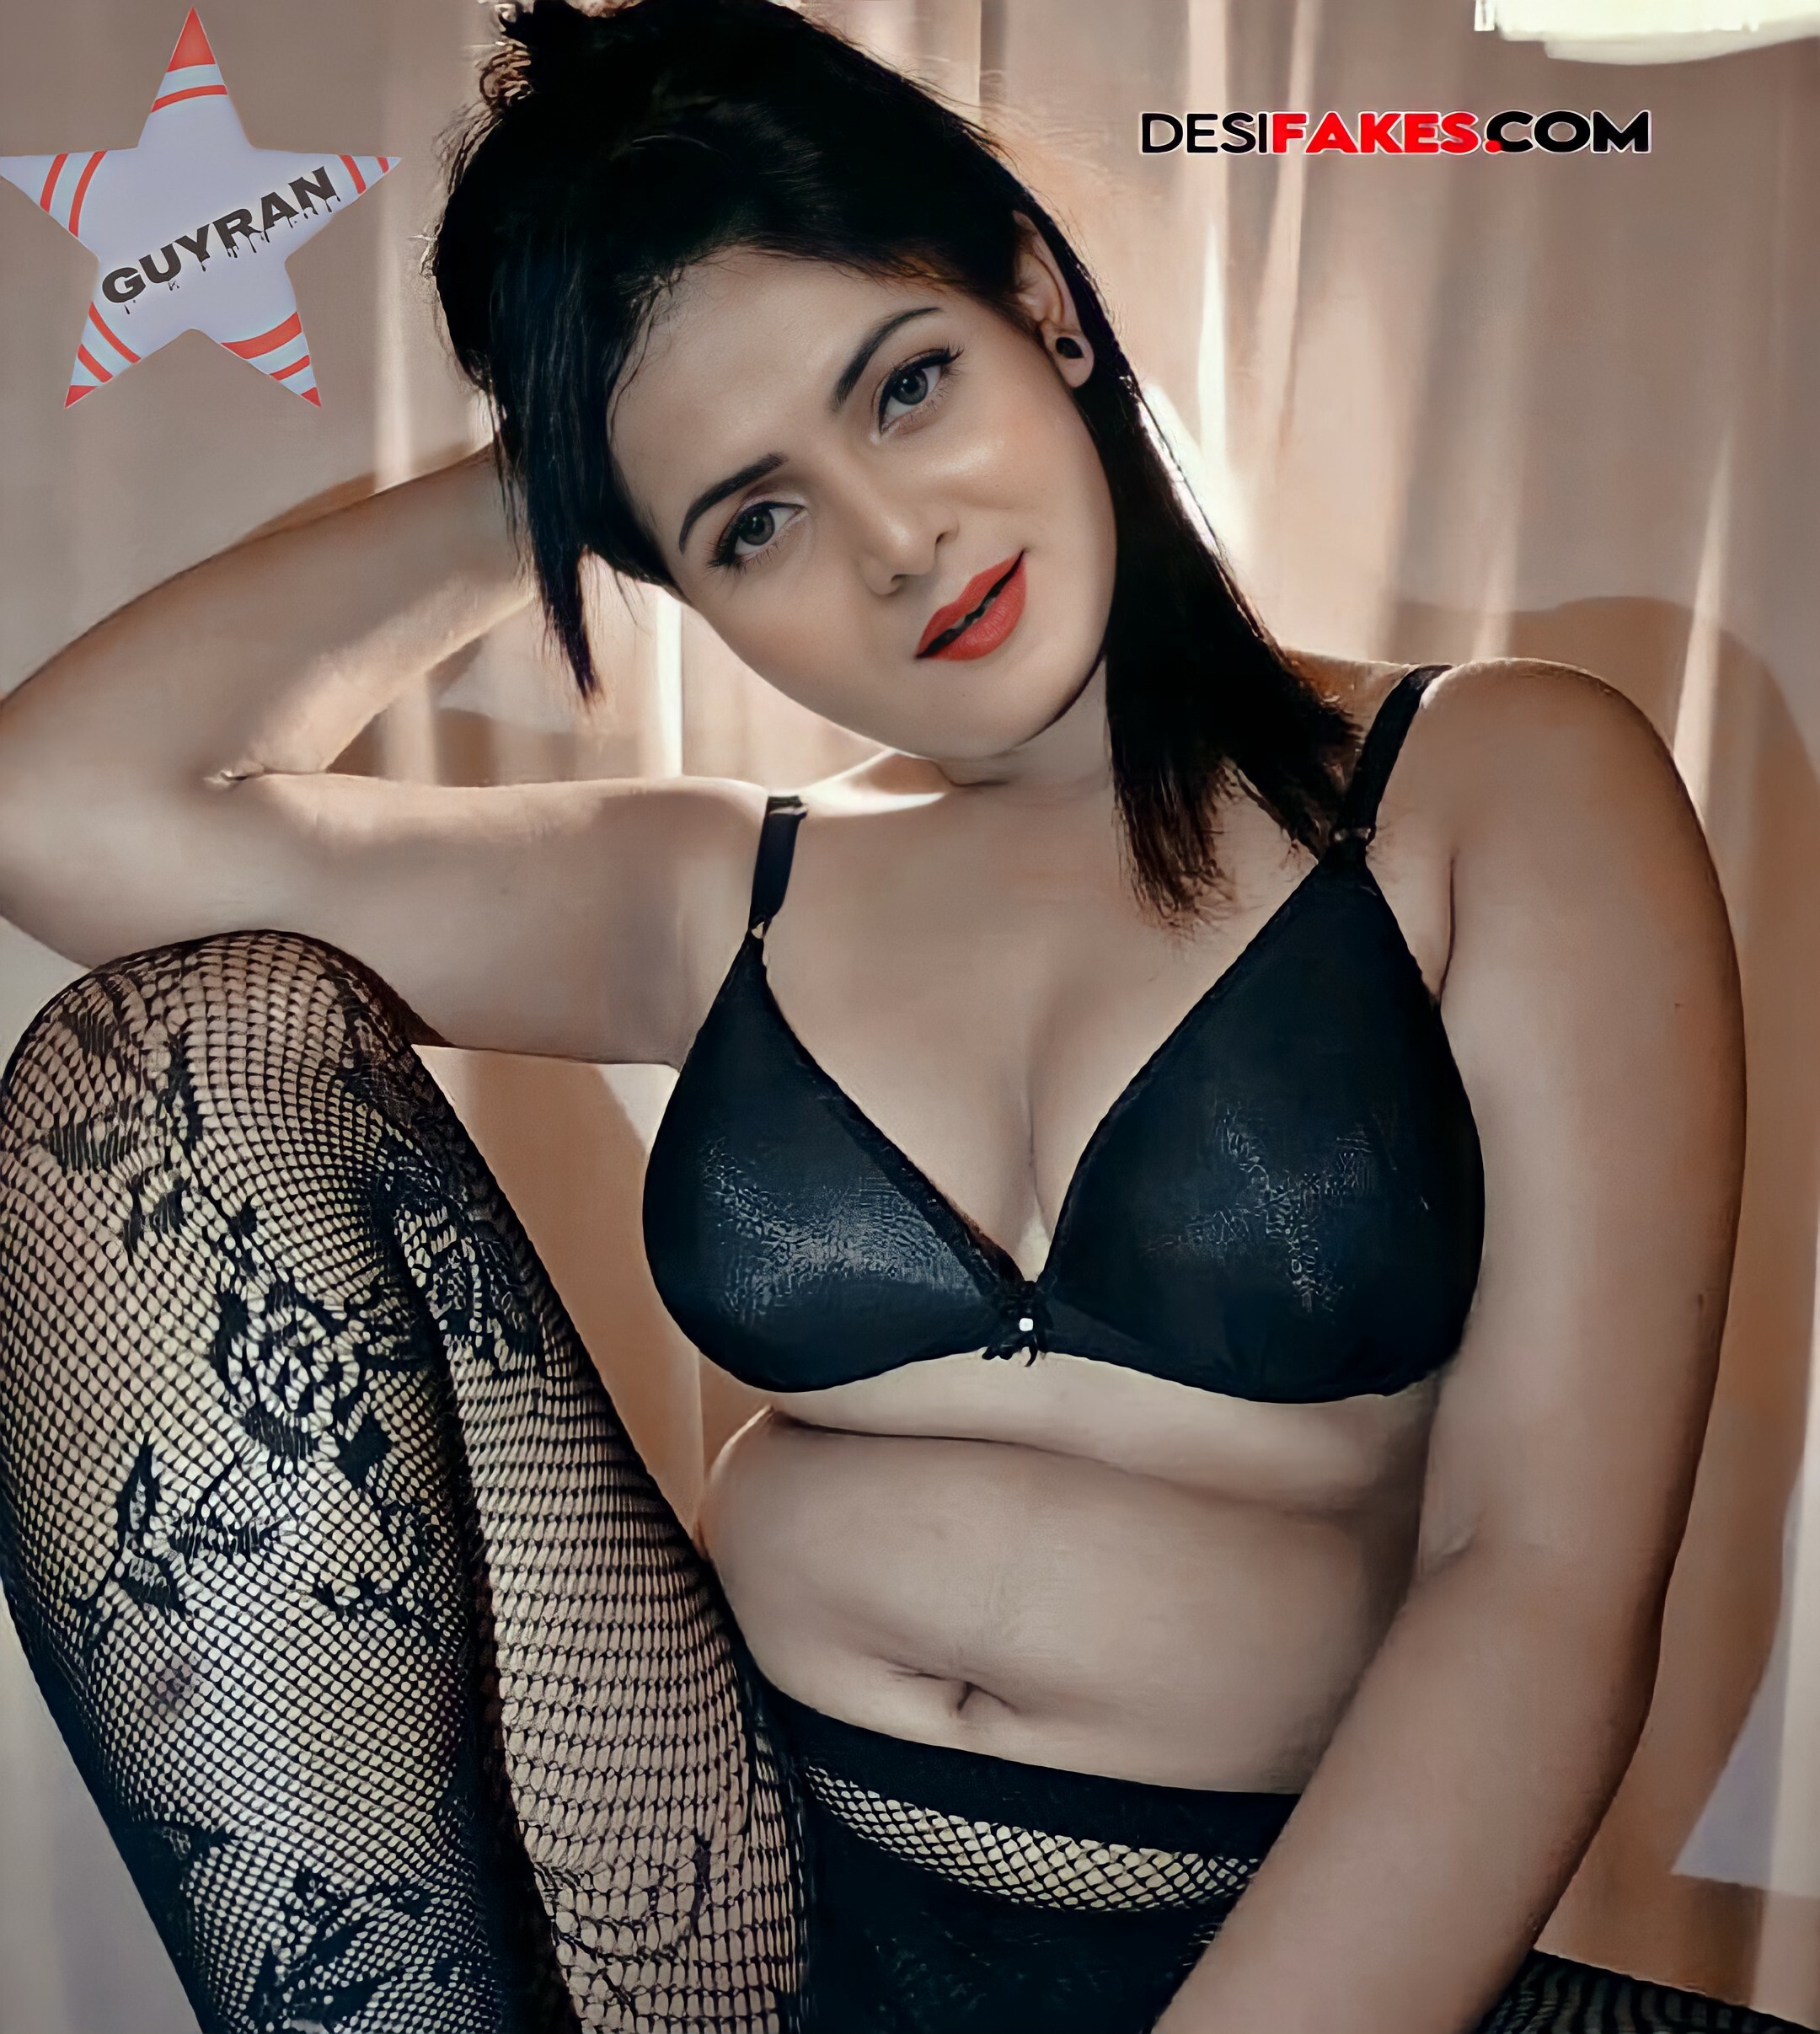 Tamil Show Hosts Nude - Divyadarshini DD nude sex photos - Tamil Actress - | Desifakes.com